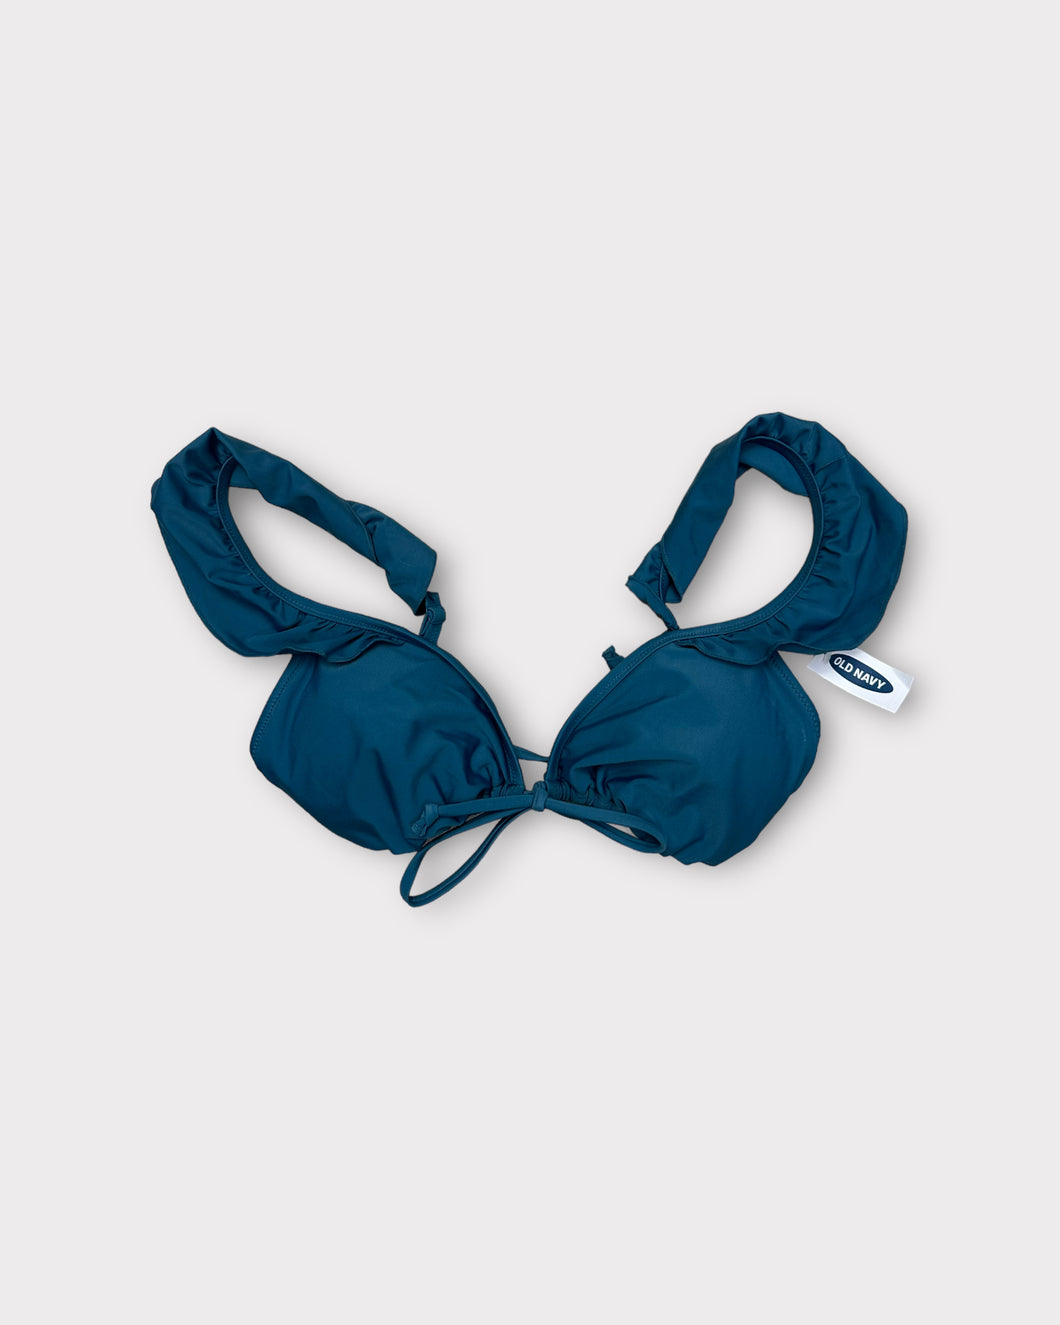 Old Navy NWT Blue Ruffled String Bikini Top (L)